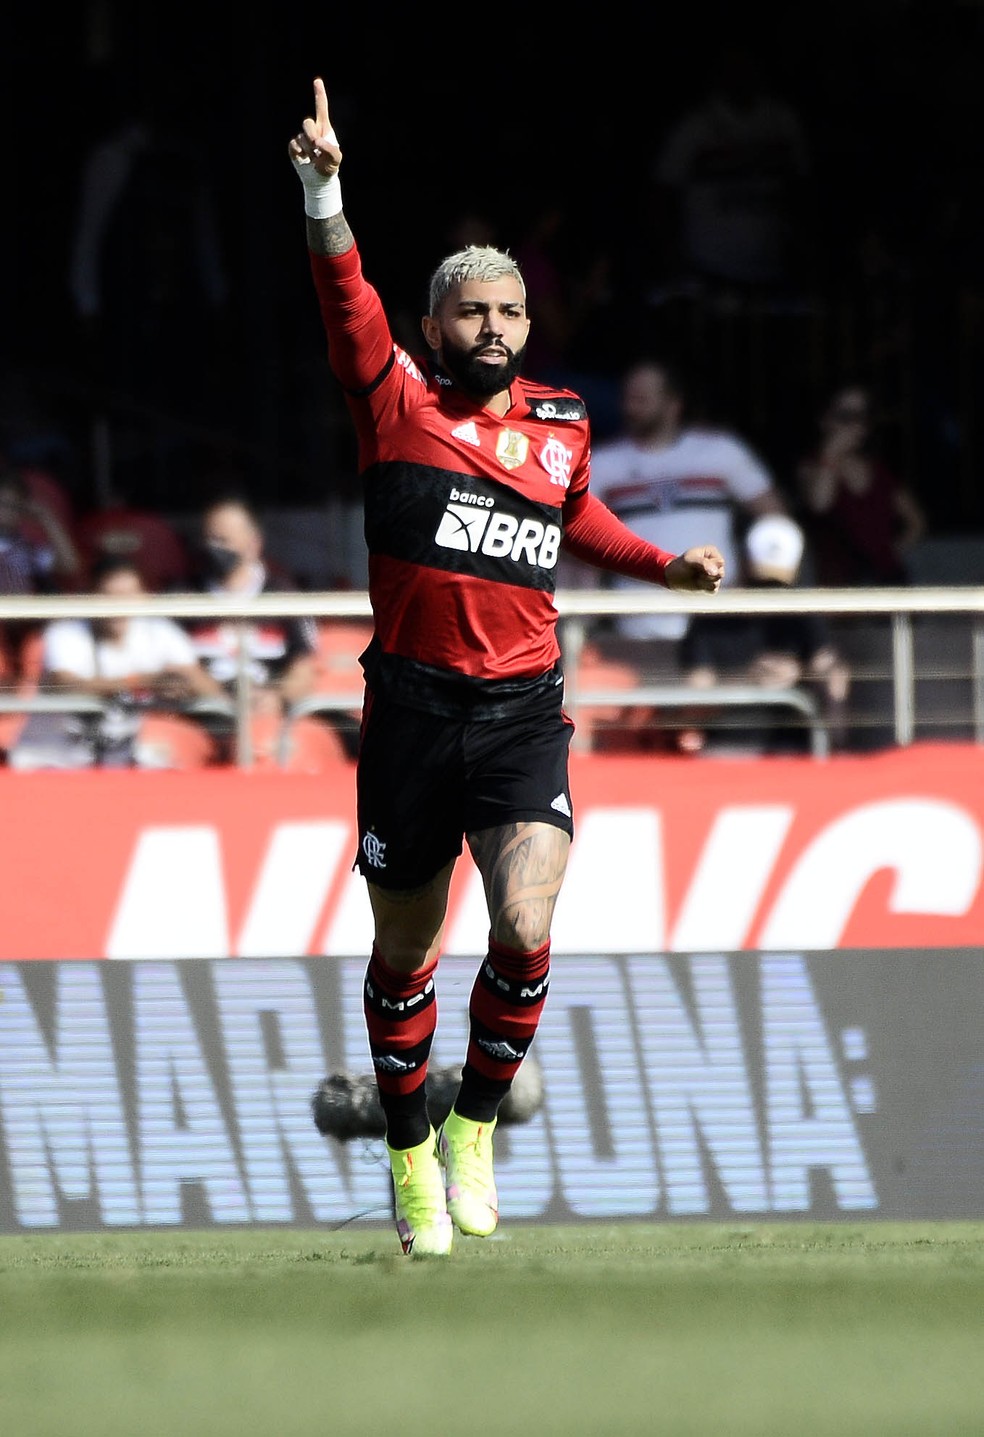 Atacante iguala Renato Gaúcho, se aproxima de gol 200 na carreira e mira clube seleto do Flamengo